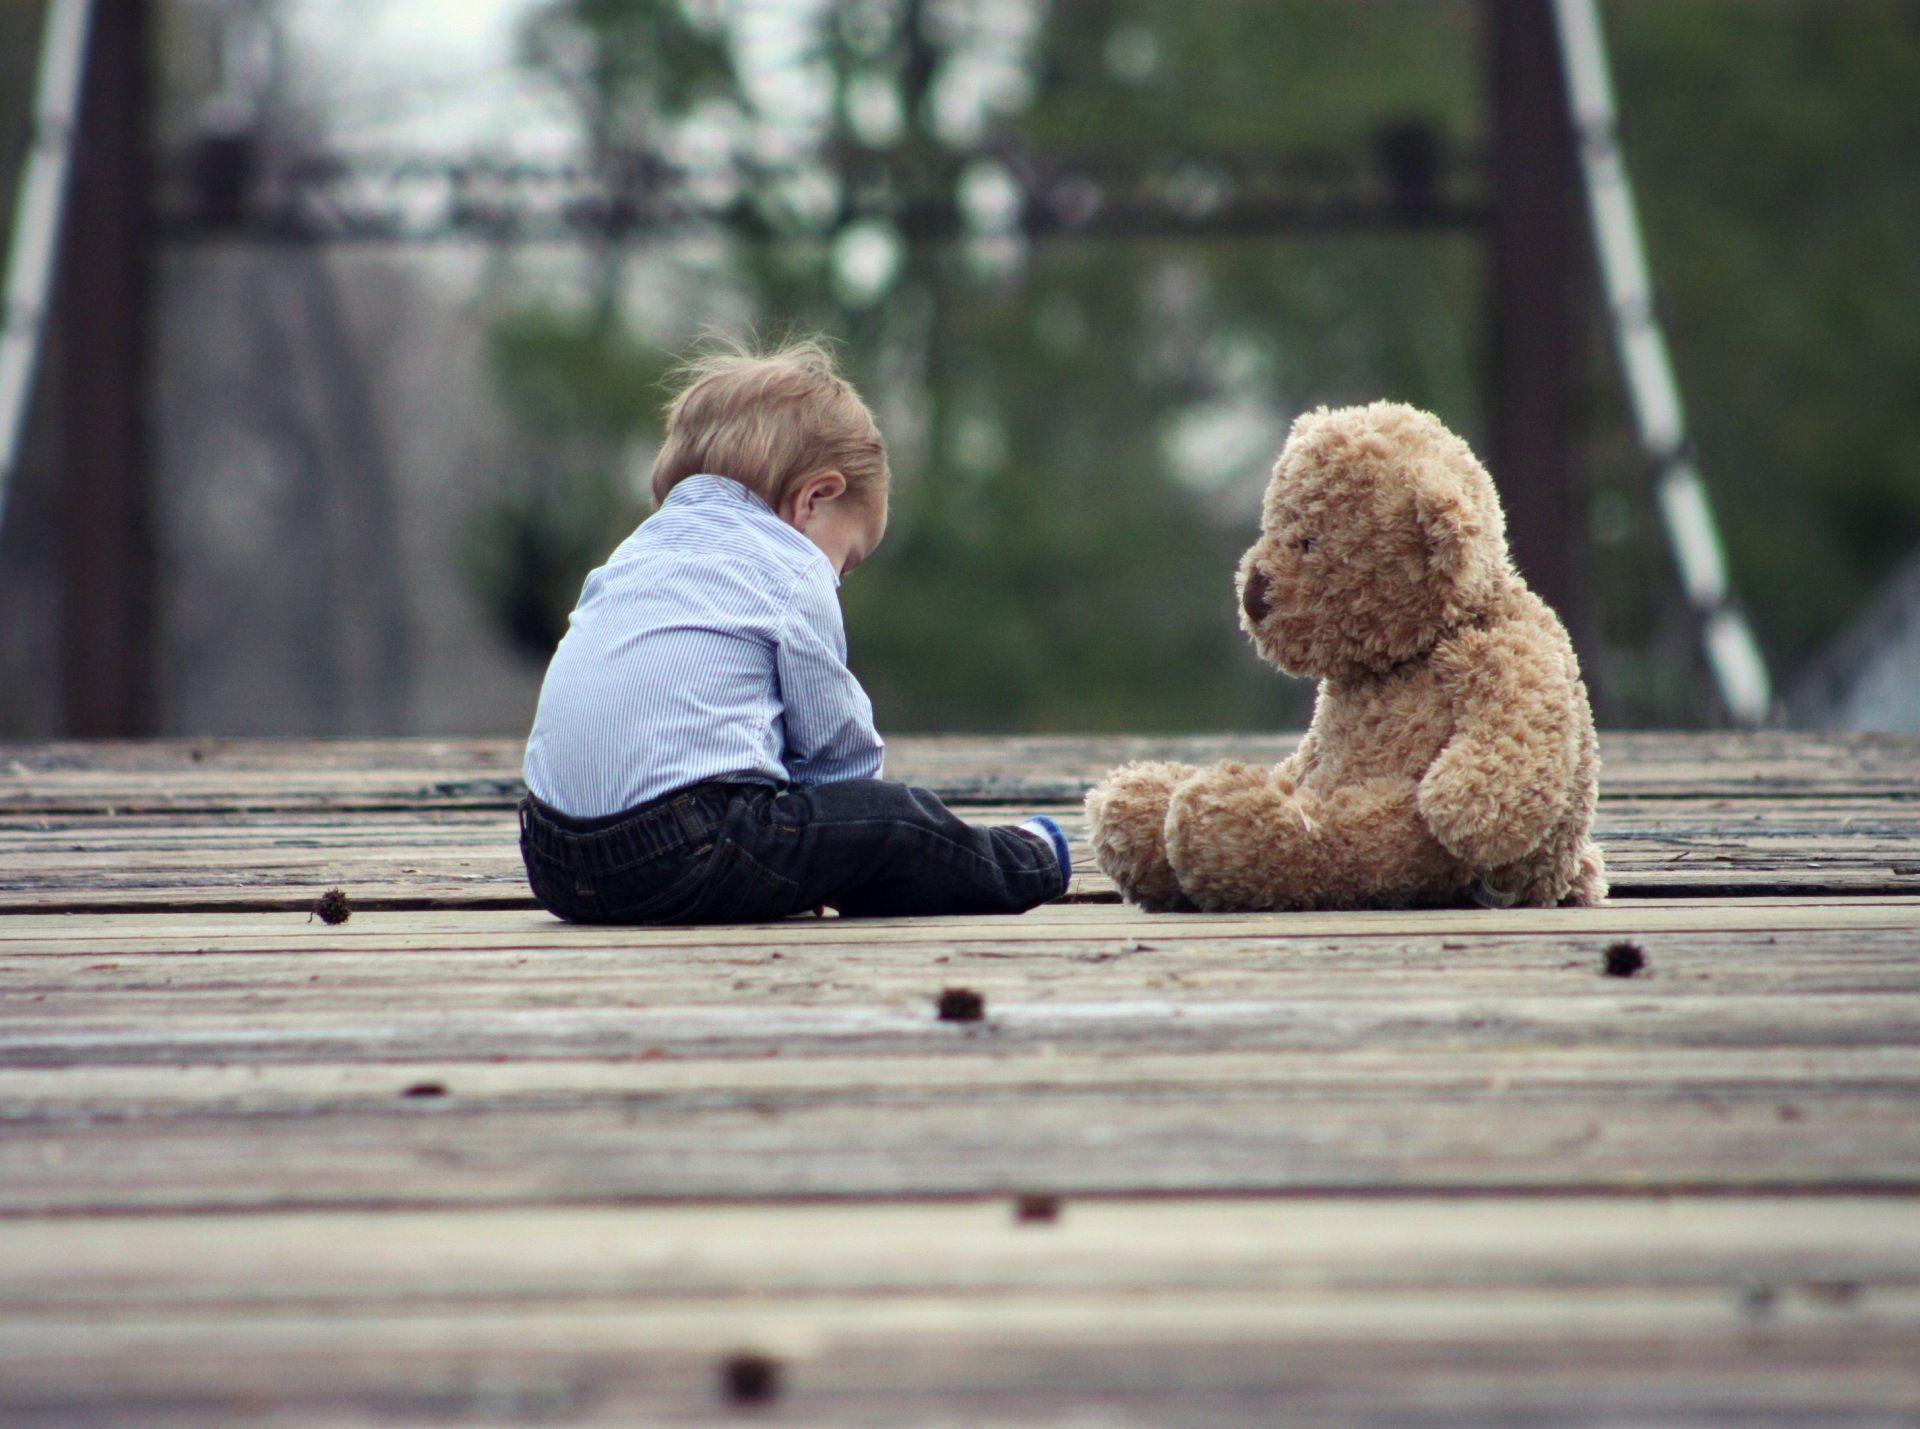 a little boy sits next to a teddy bear on a wooden deck